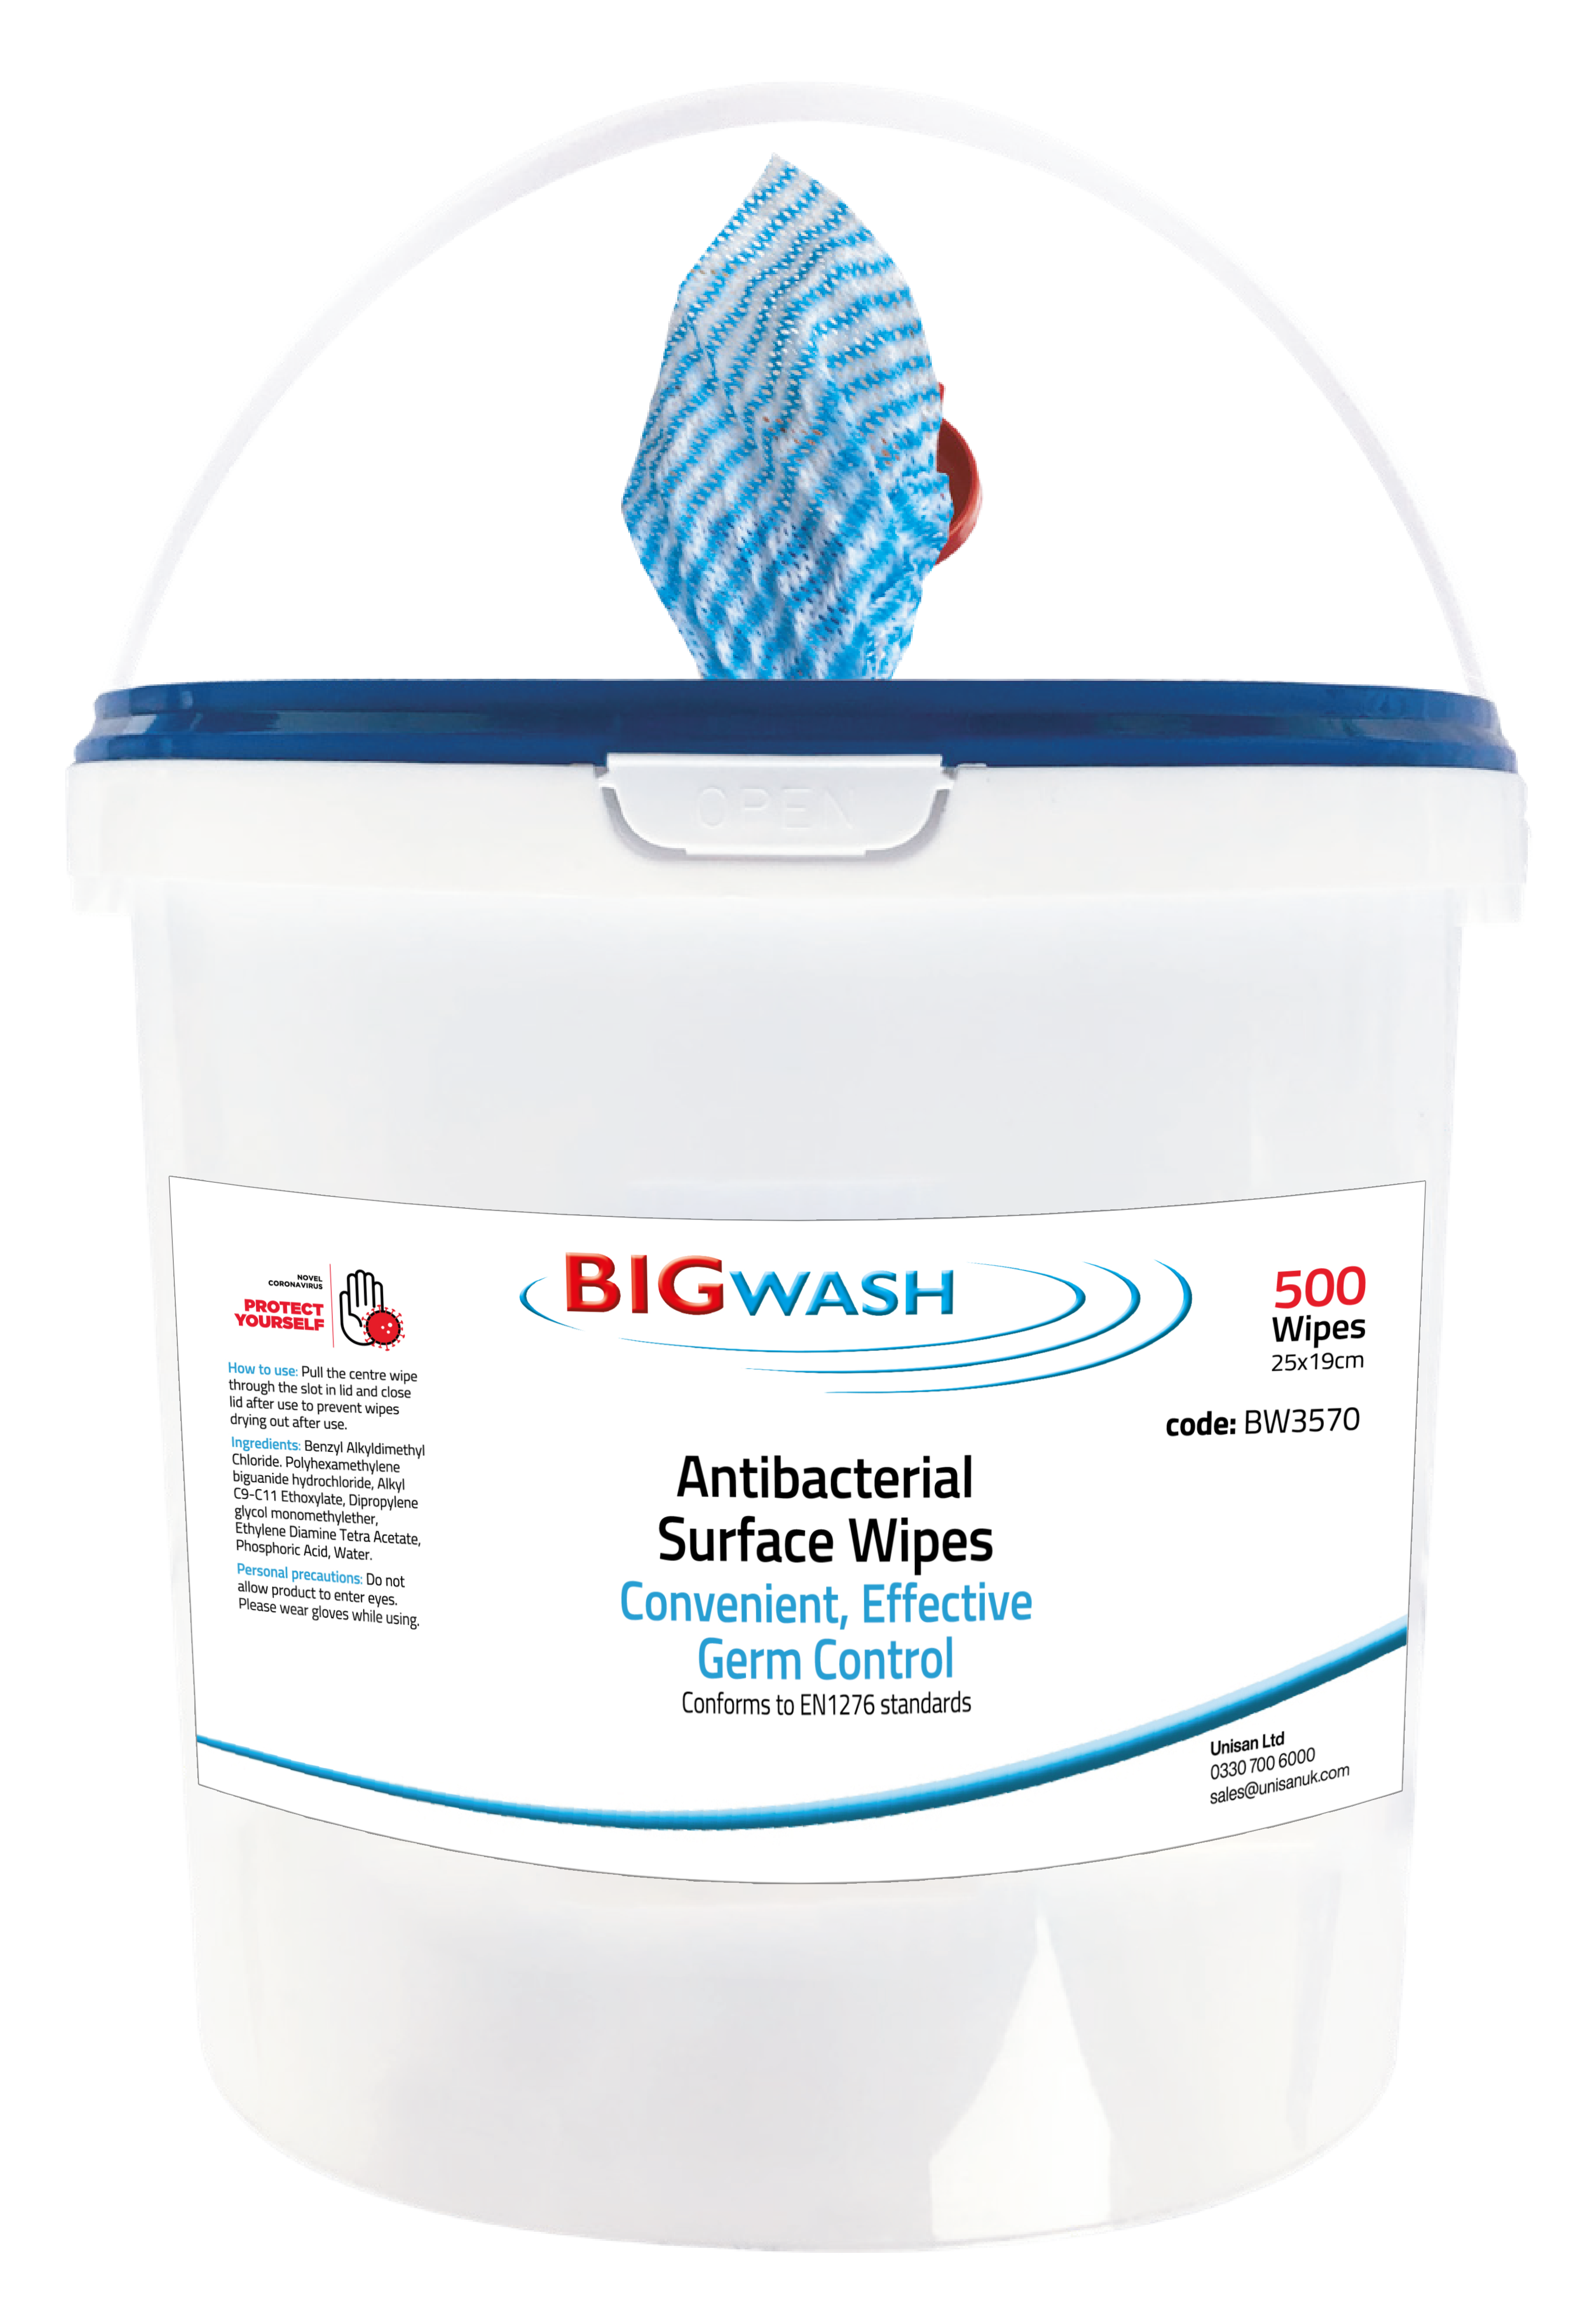 Big Wash antibacterial Surface sanitiser Wipes for killing bacteria and viruses